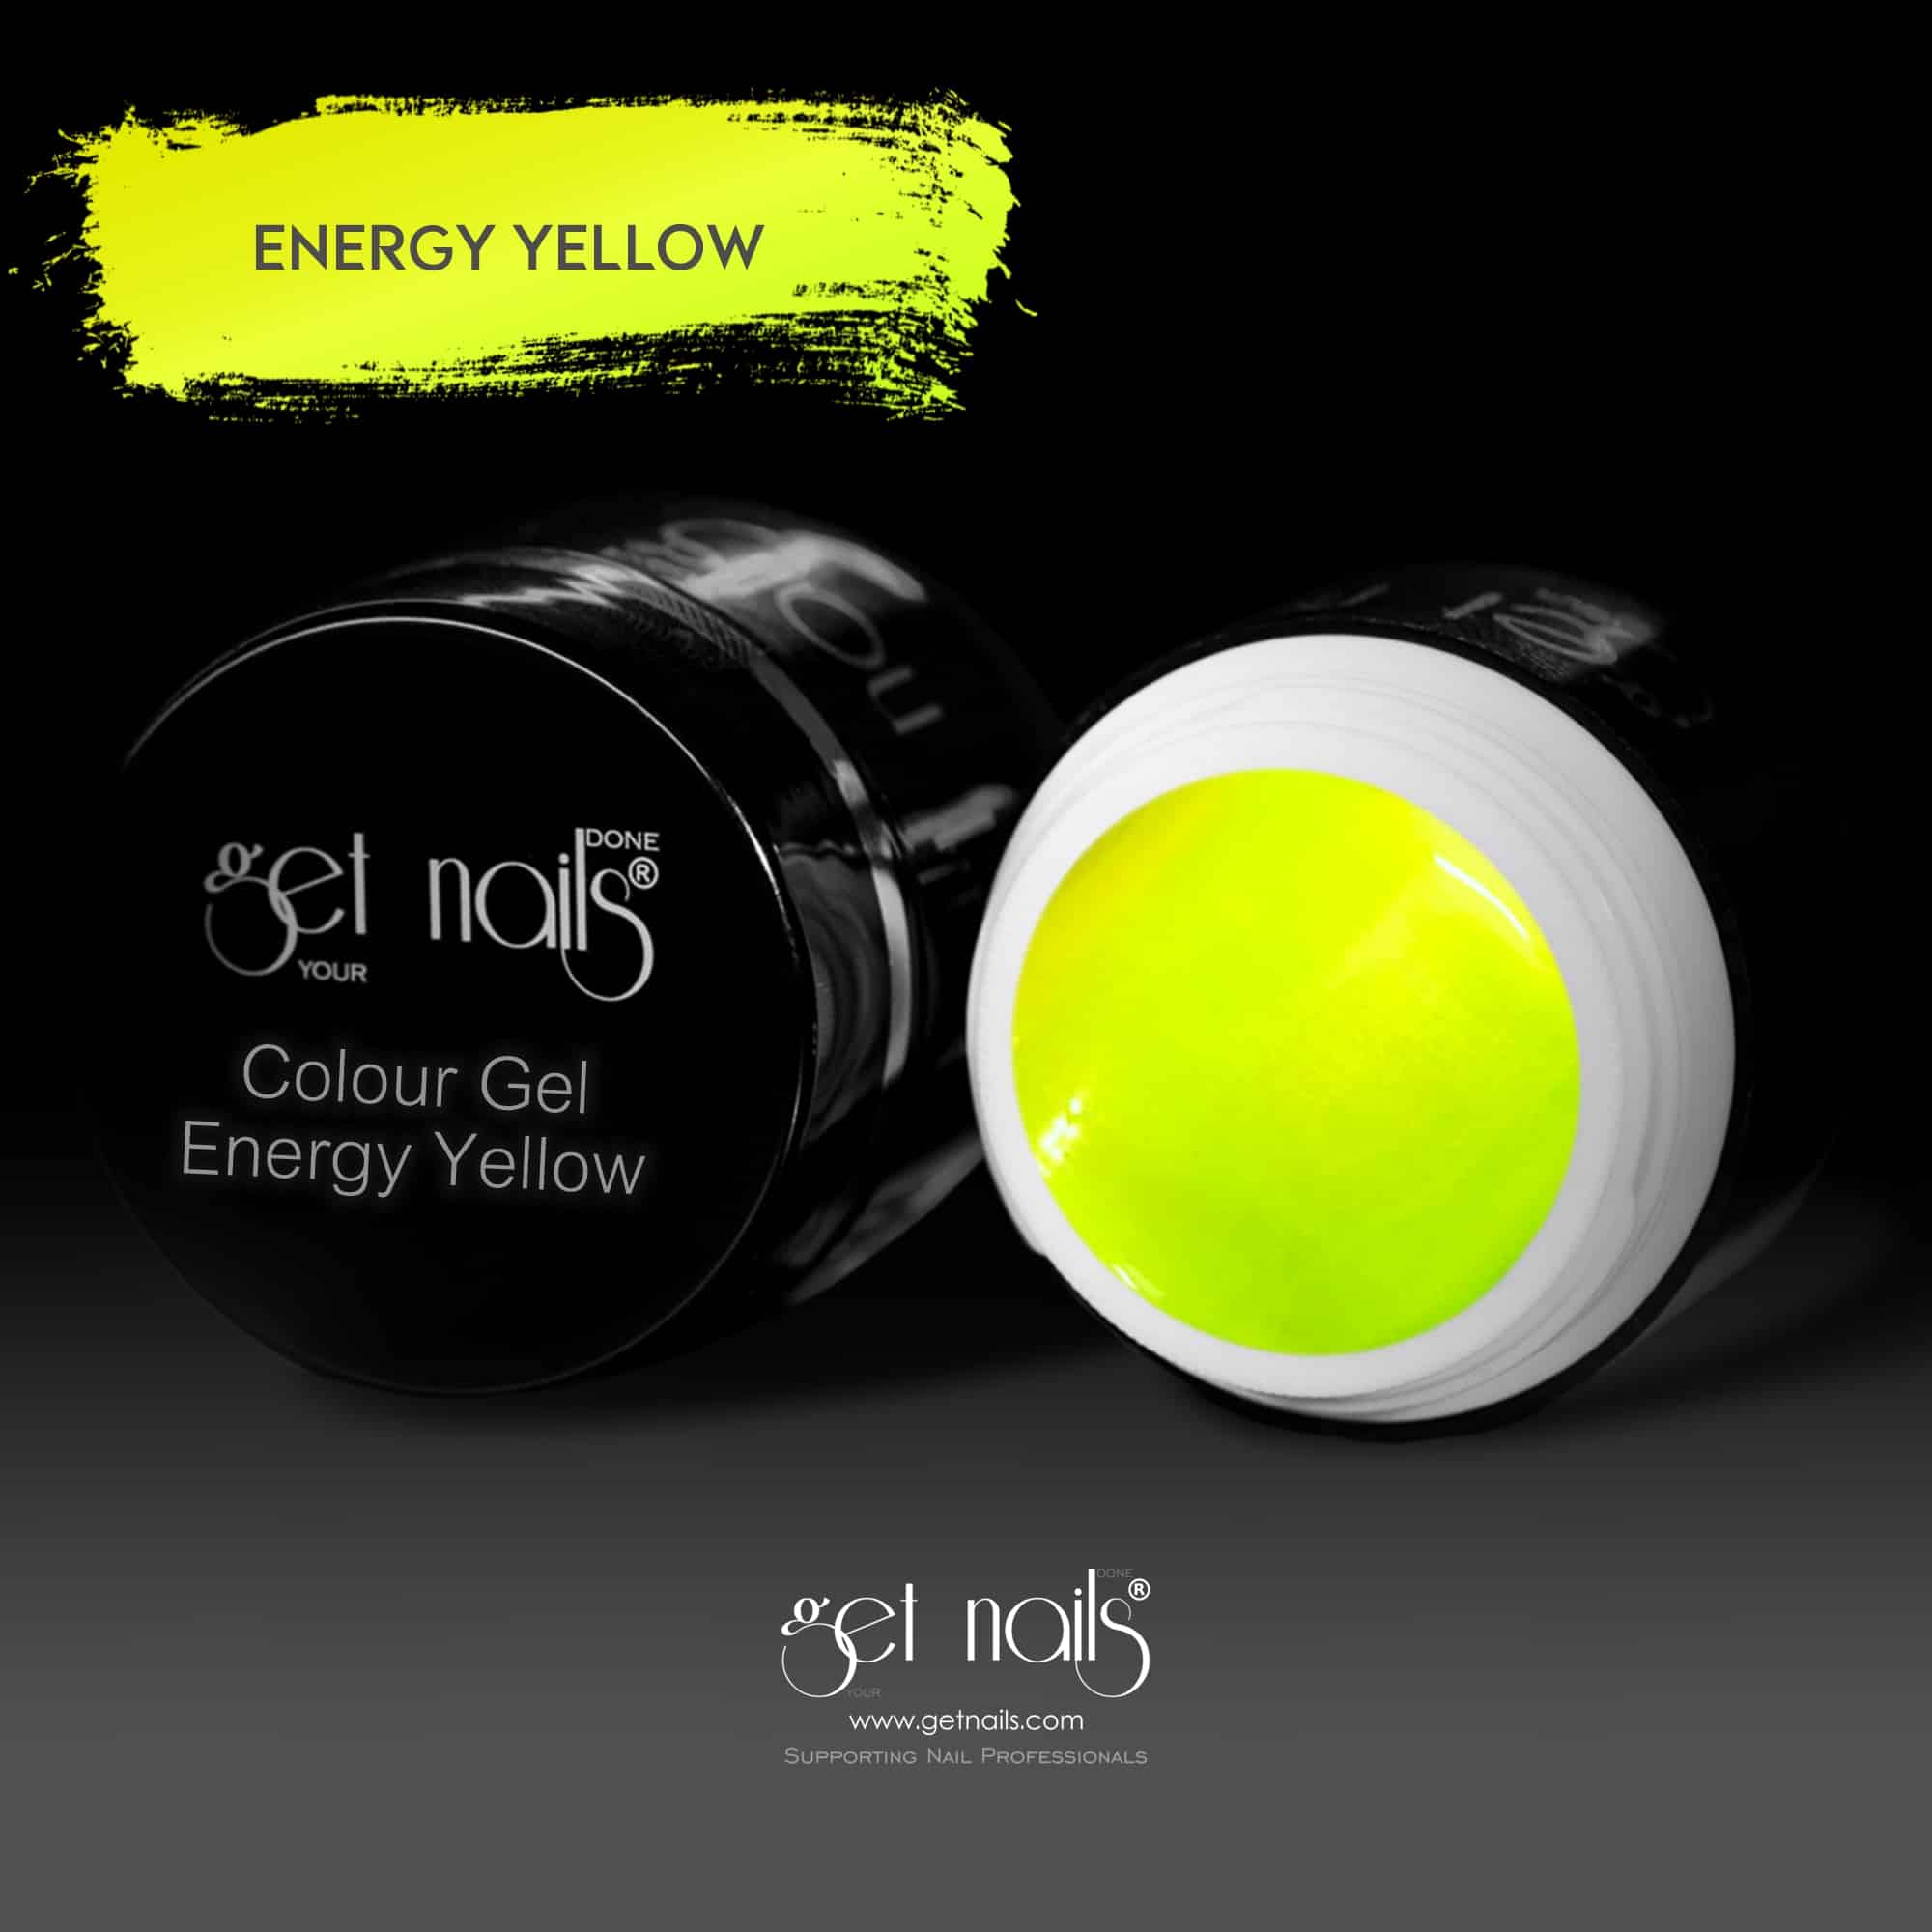 Get Nails Austria - Color Gel Energy Yellow 5g